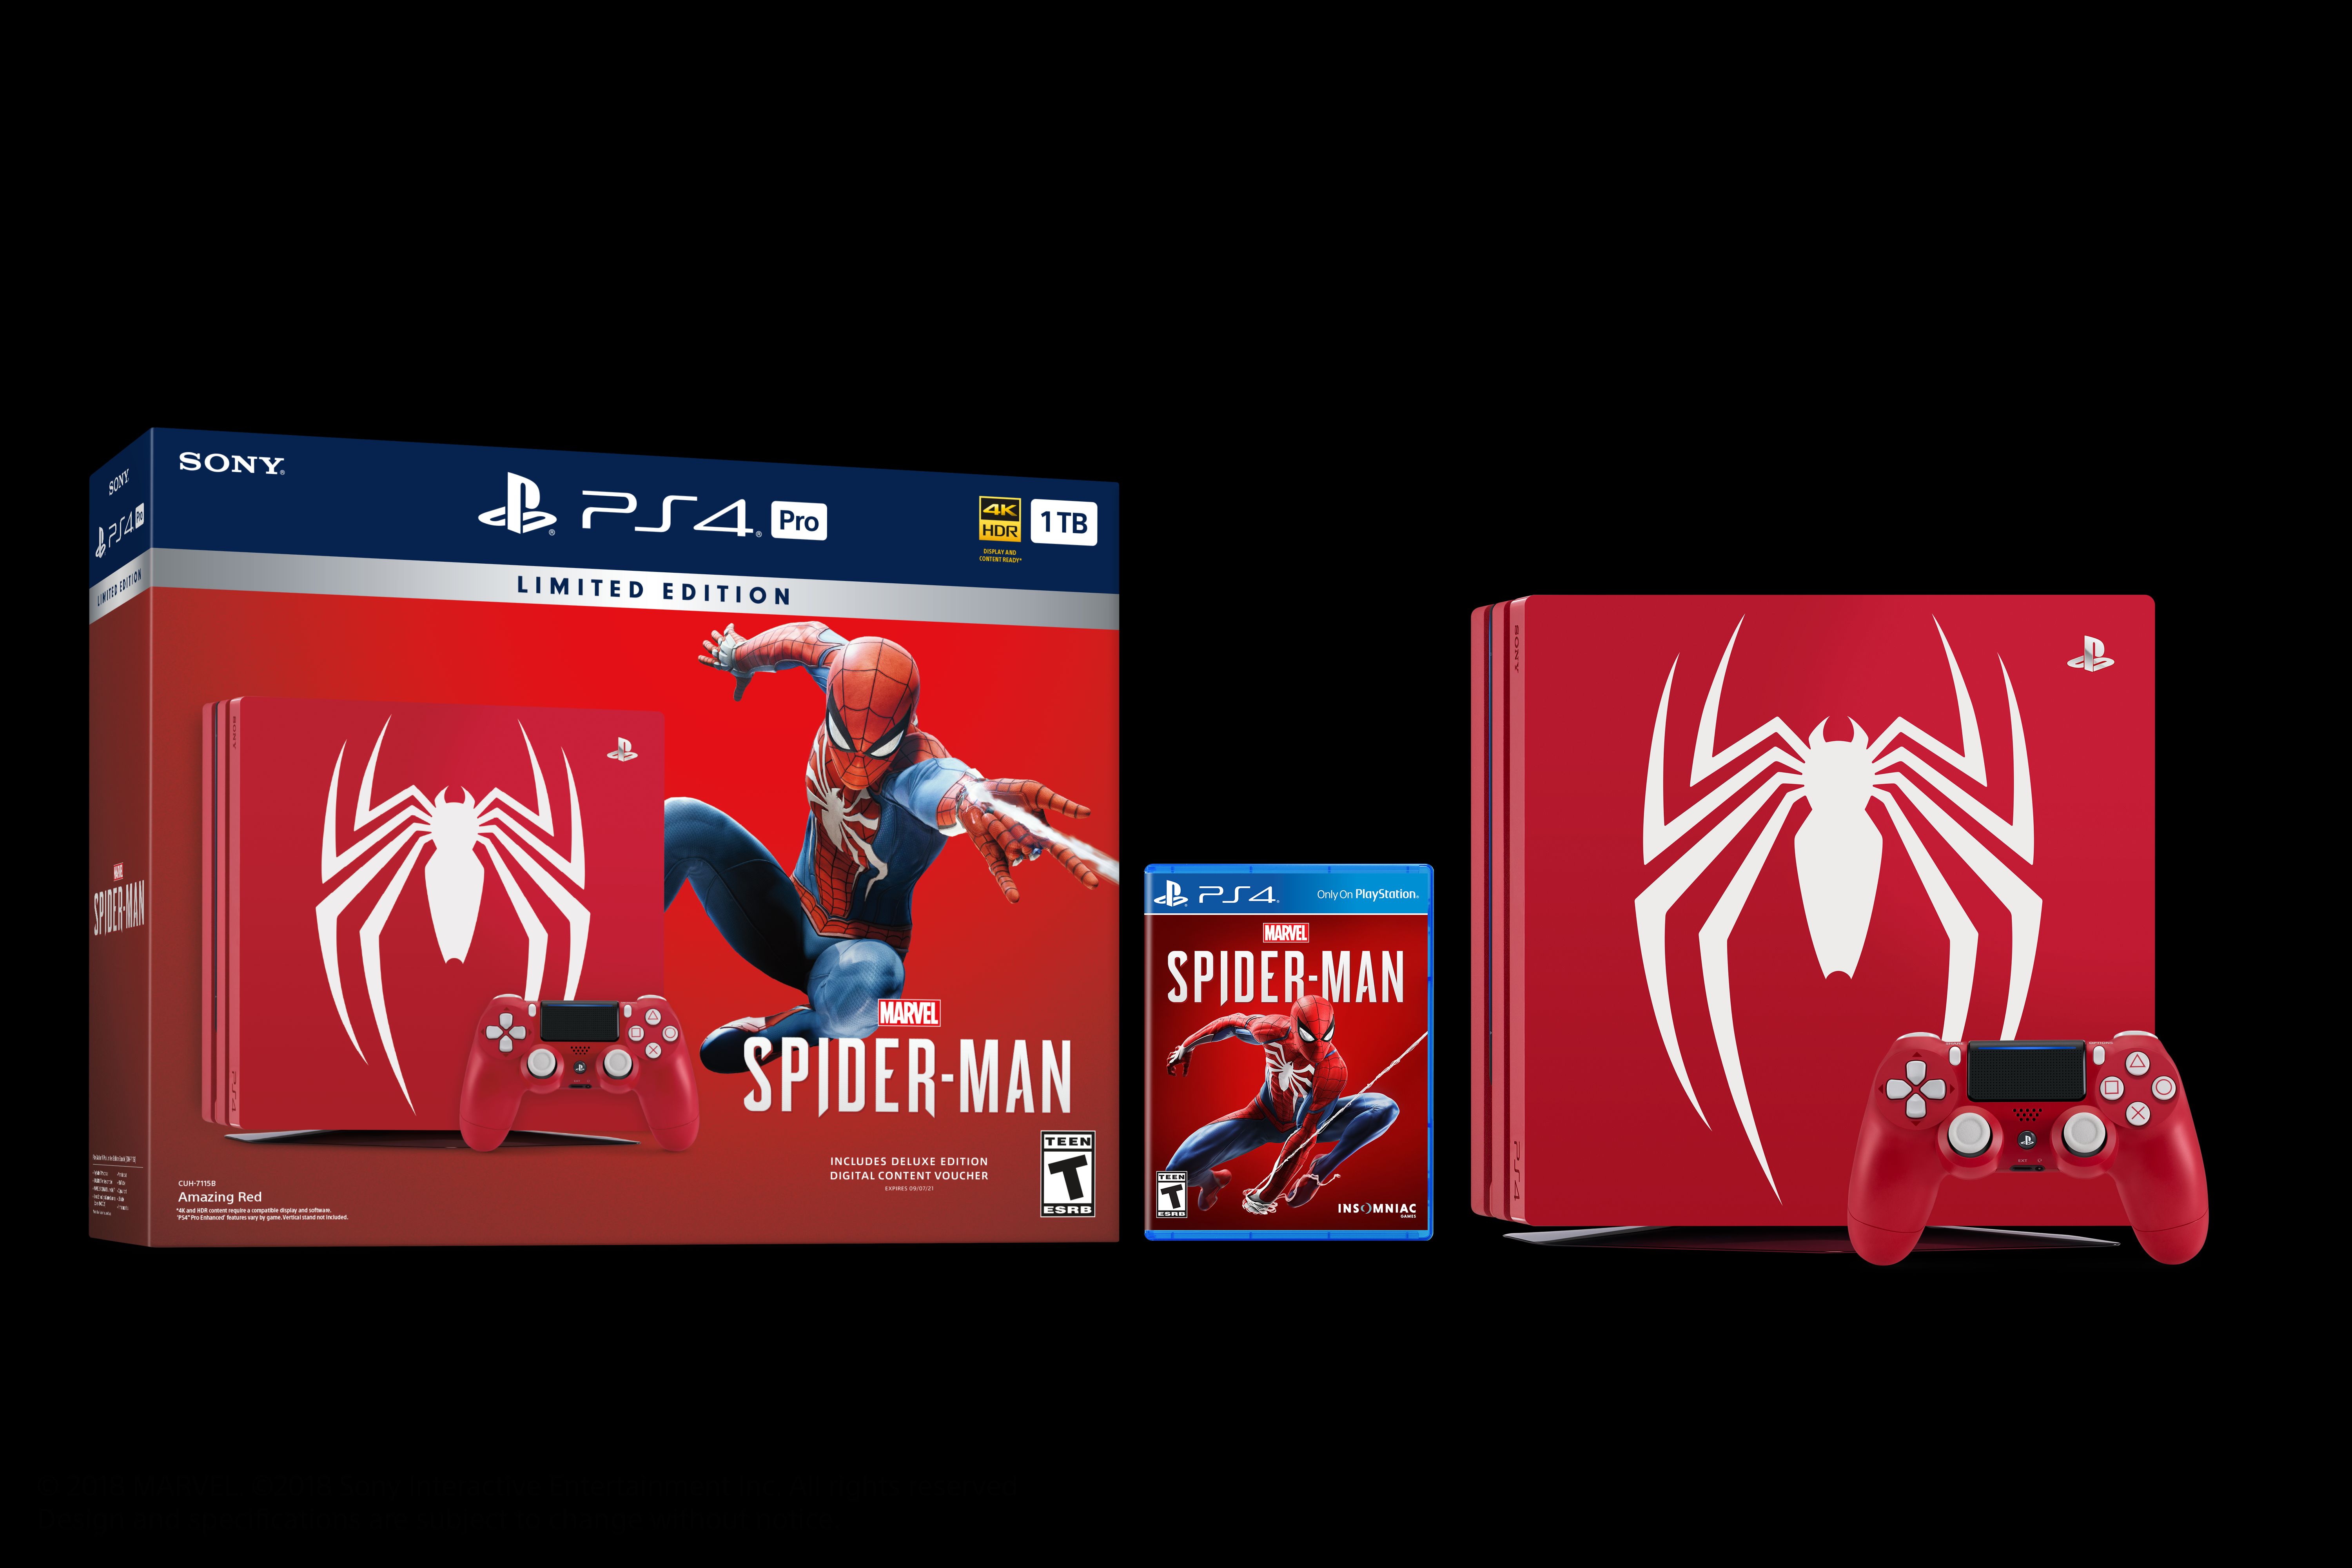 Спайдер про. PLAYSTATION 4 Limited Edition человек паук. PLAYSTATION 4 Pro Spider man Limited Edition. Marvel Spider man ps4 диск. Ps4 Spider man консоль.